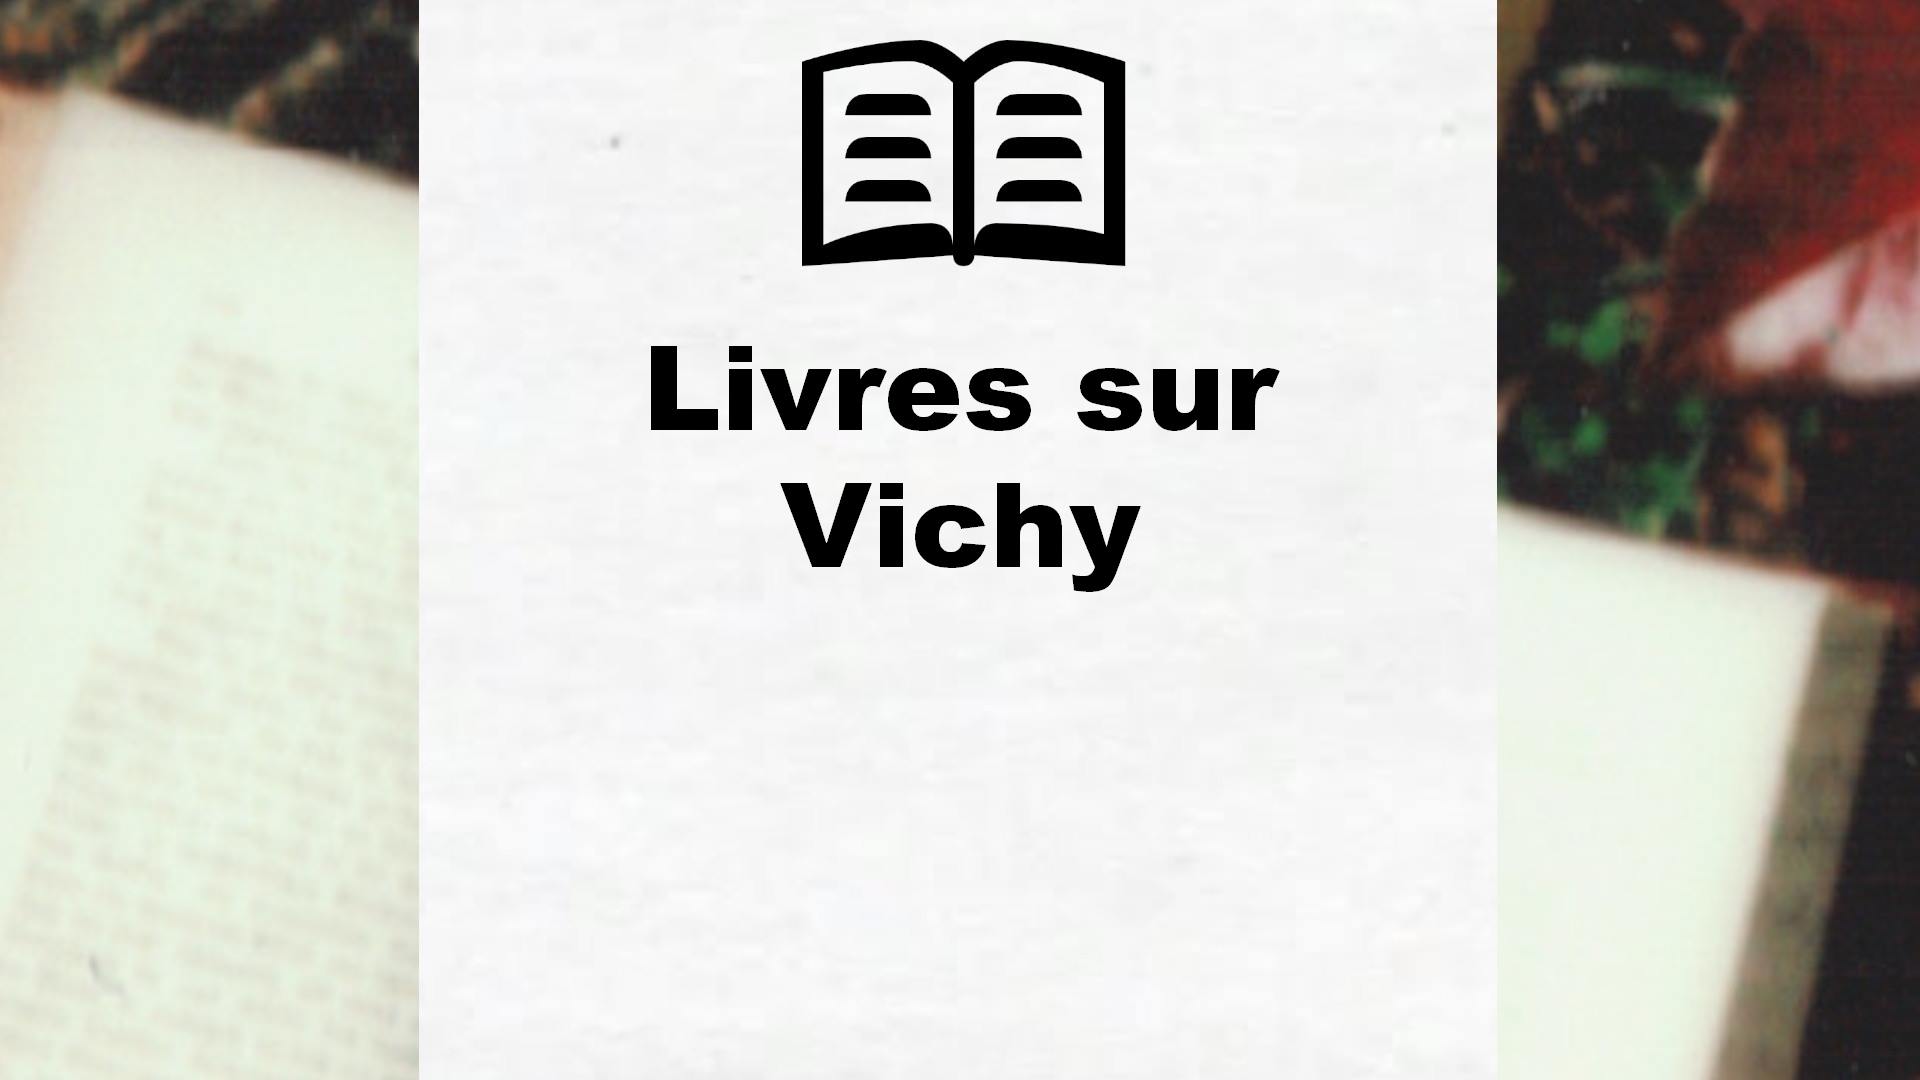 Livres sur Vichy